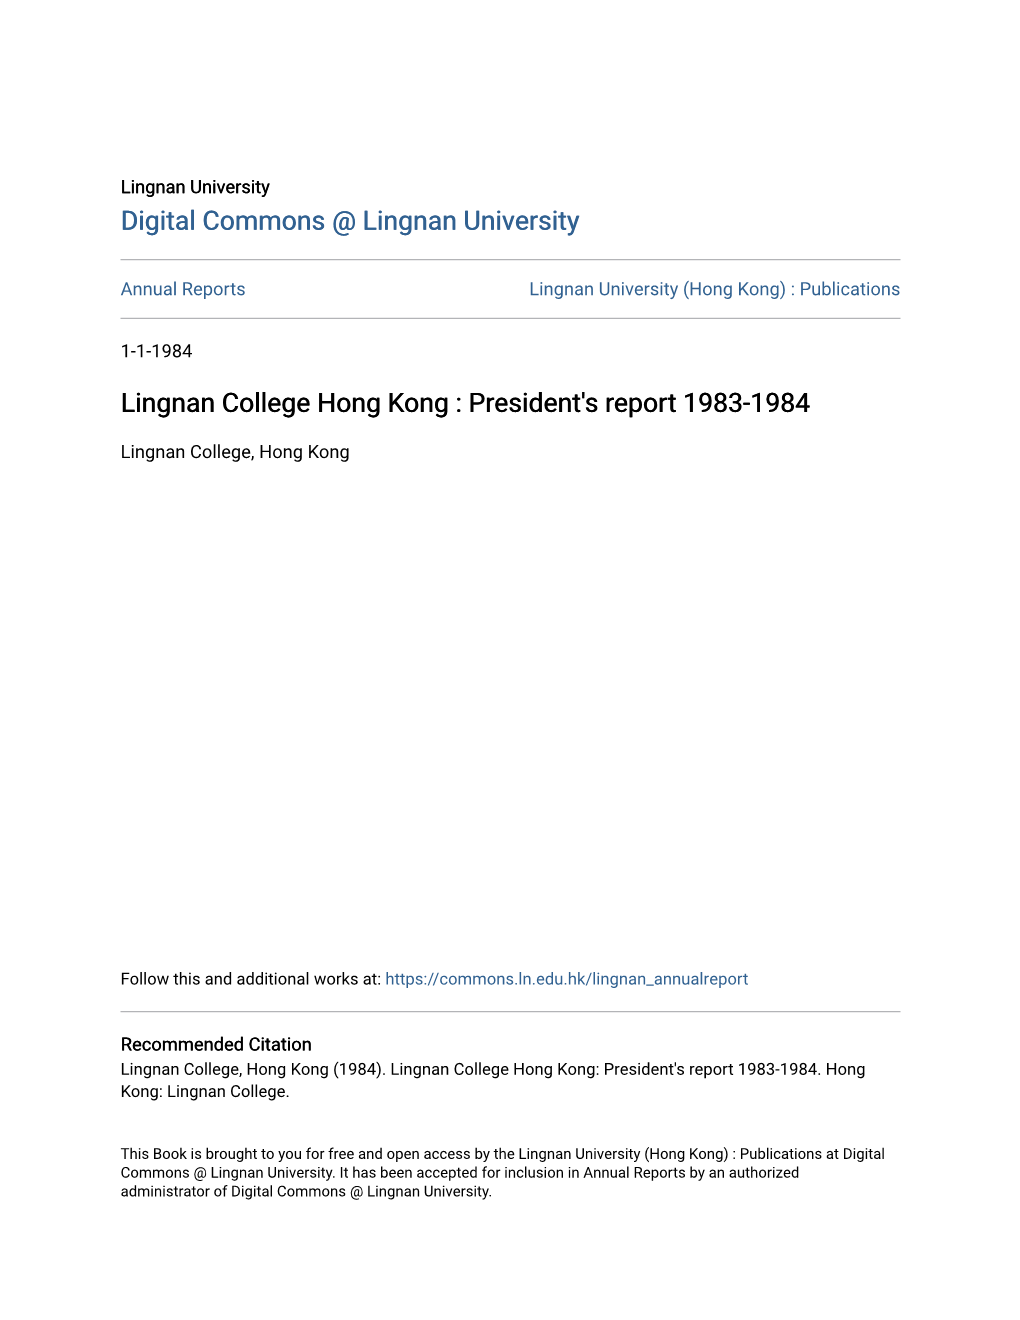 Lingnan College Hong Kong : President's Report 1983-1984